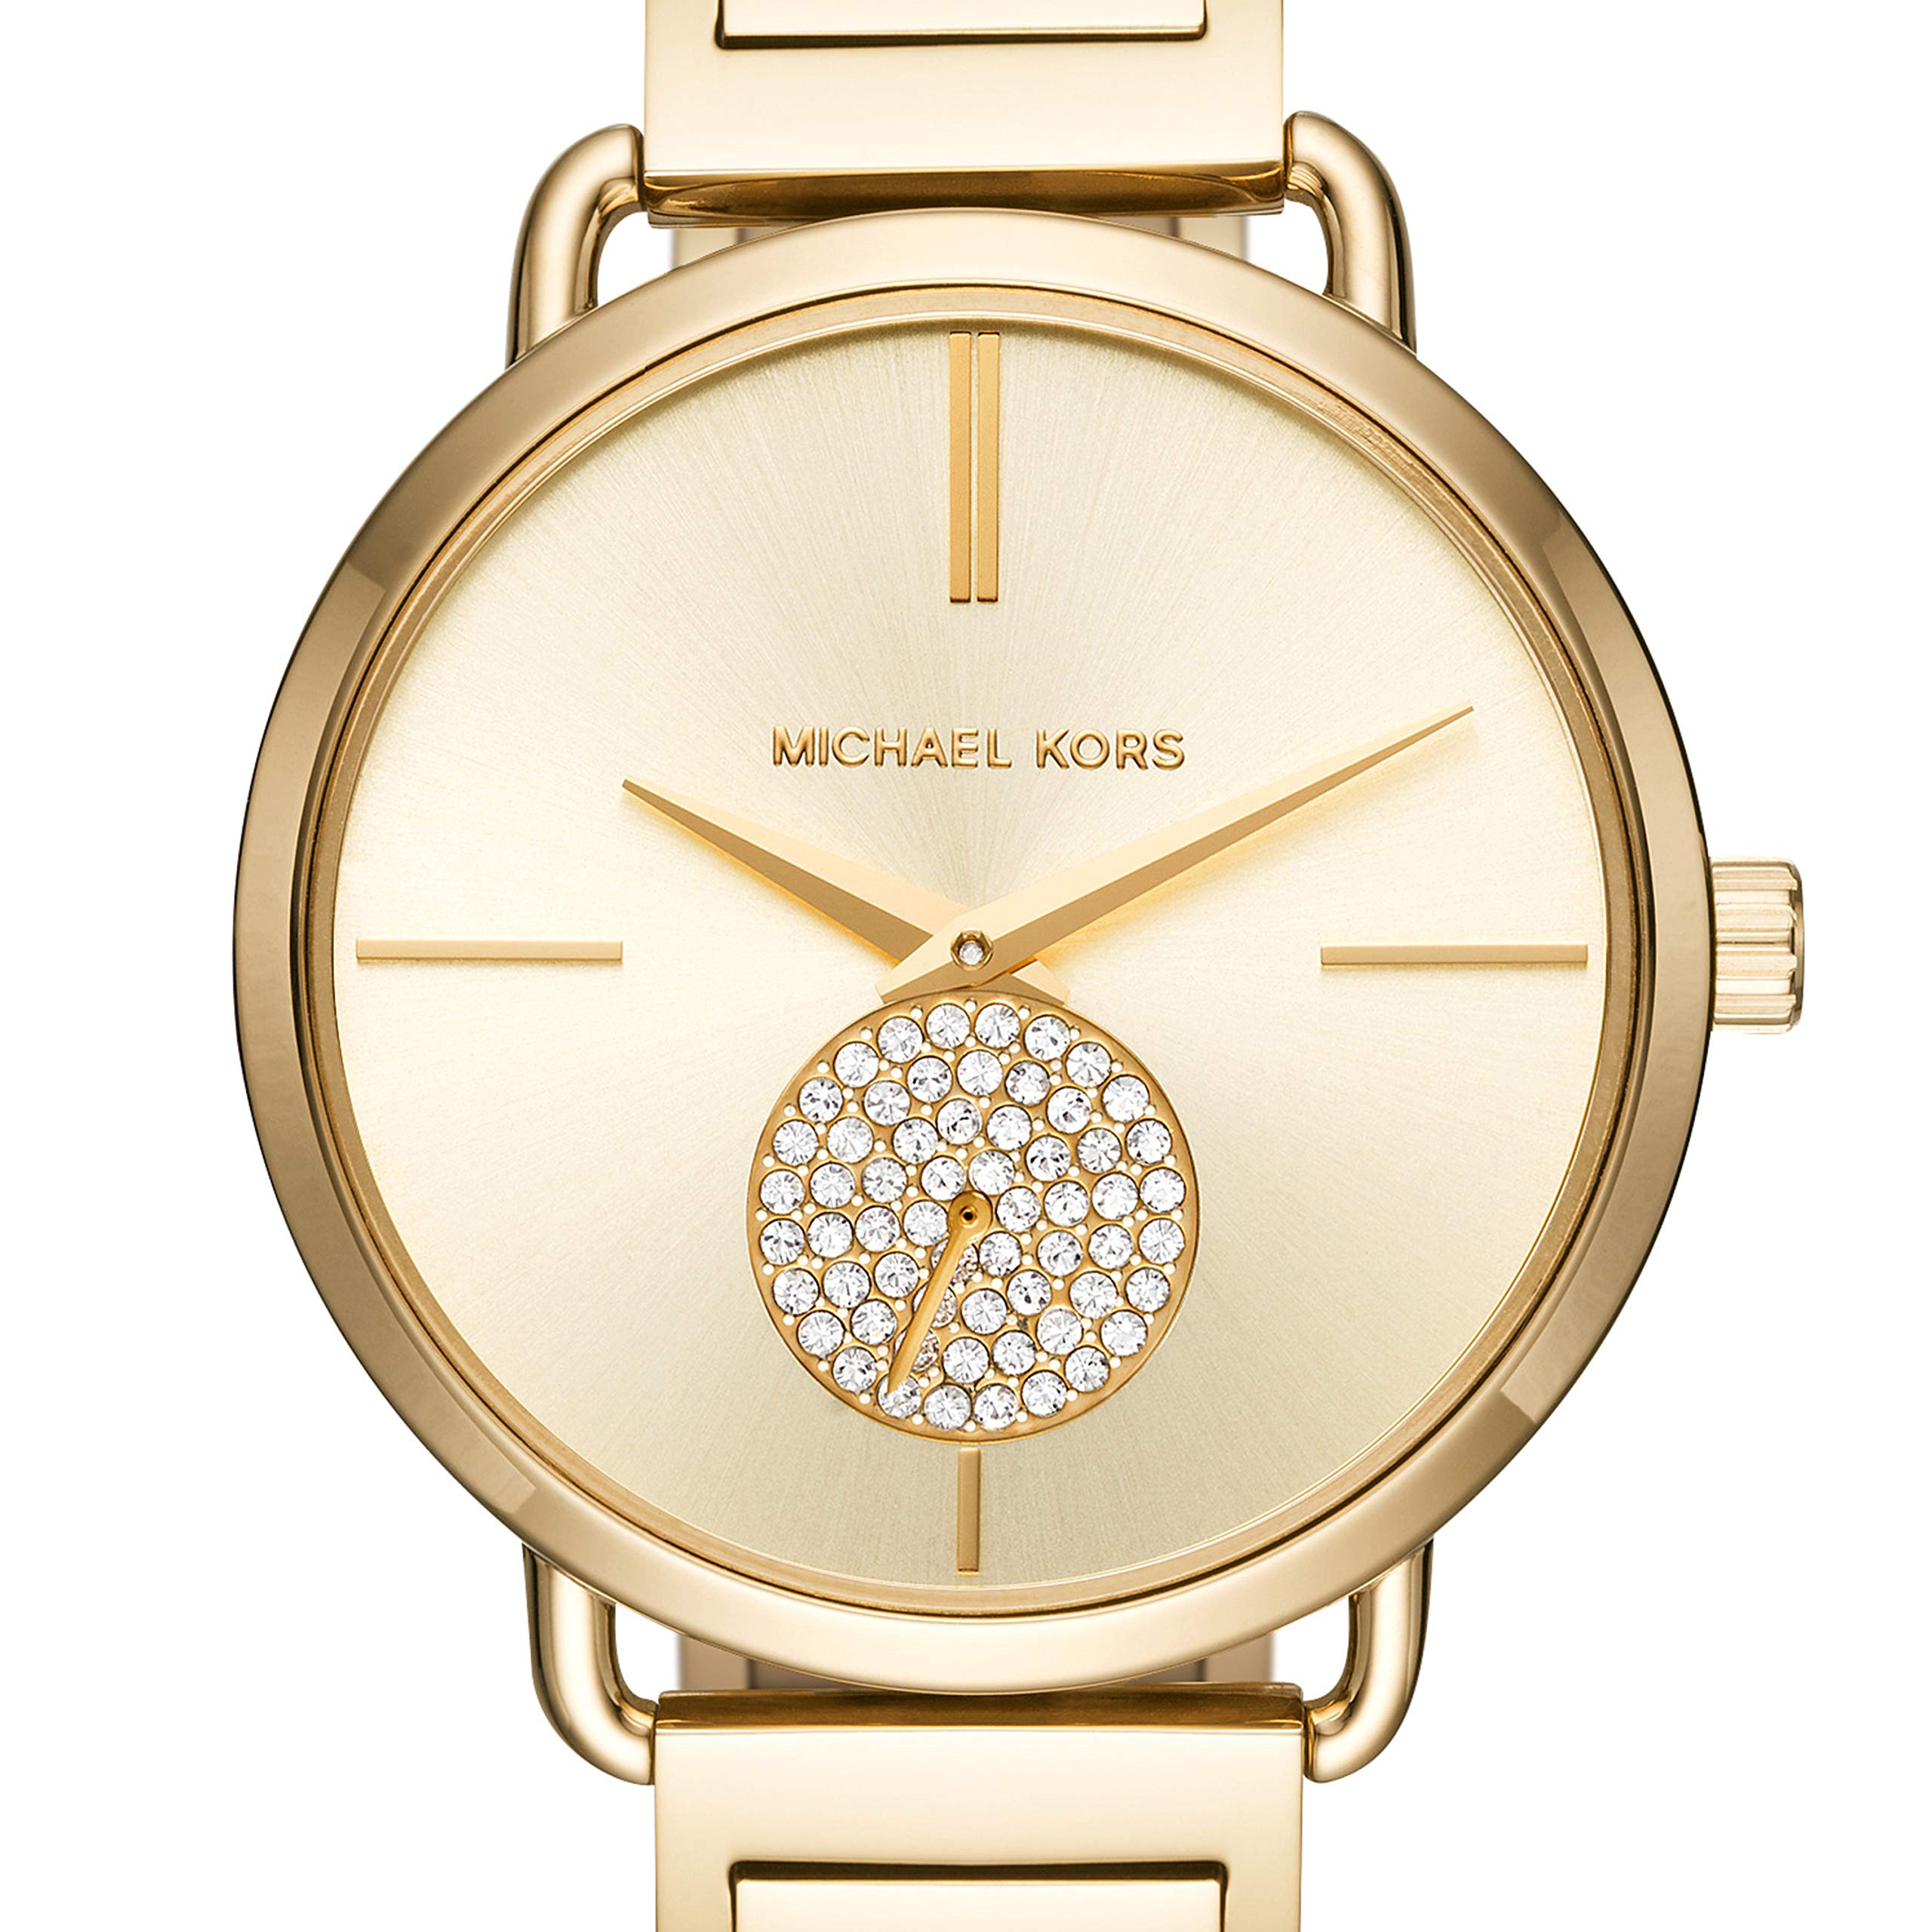 Michael Kors Women's Portia Three-Hand Stainless Steel Watch